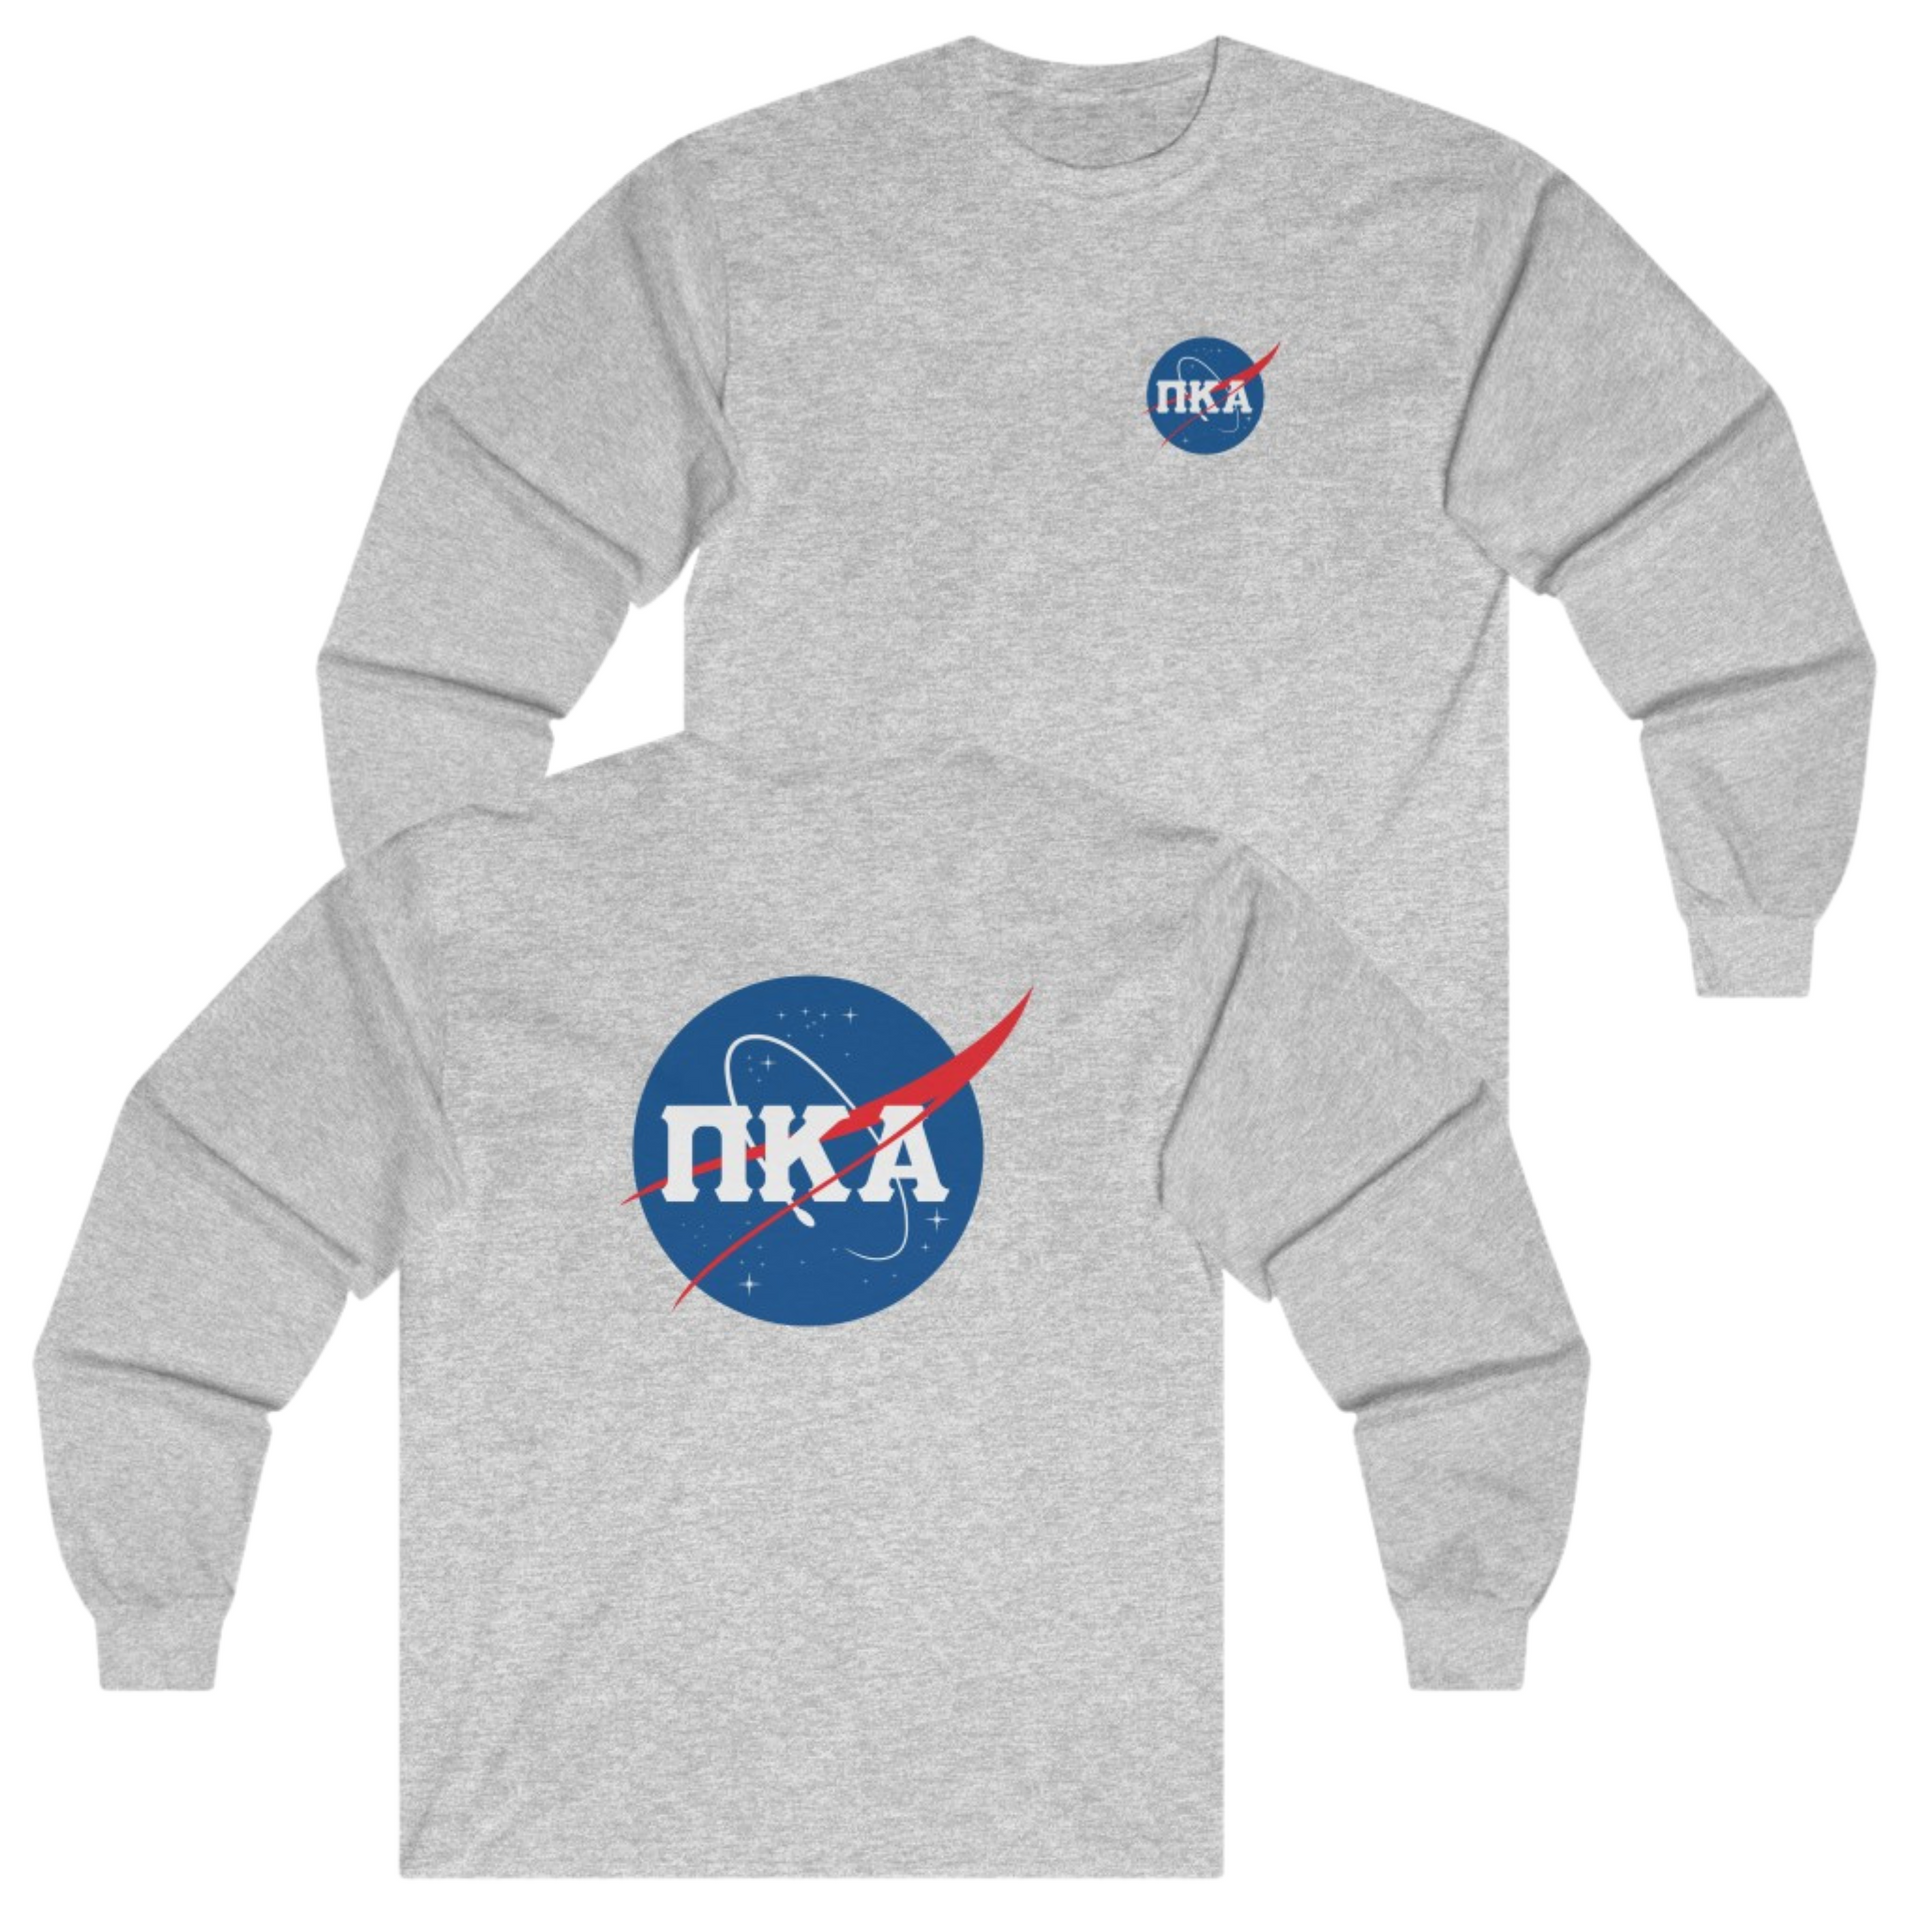 Grey Pi Kappa Alpha Graphic Long Sleeve | Nasa 2.0 | Pi kappa alpha fraternity shirt